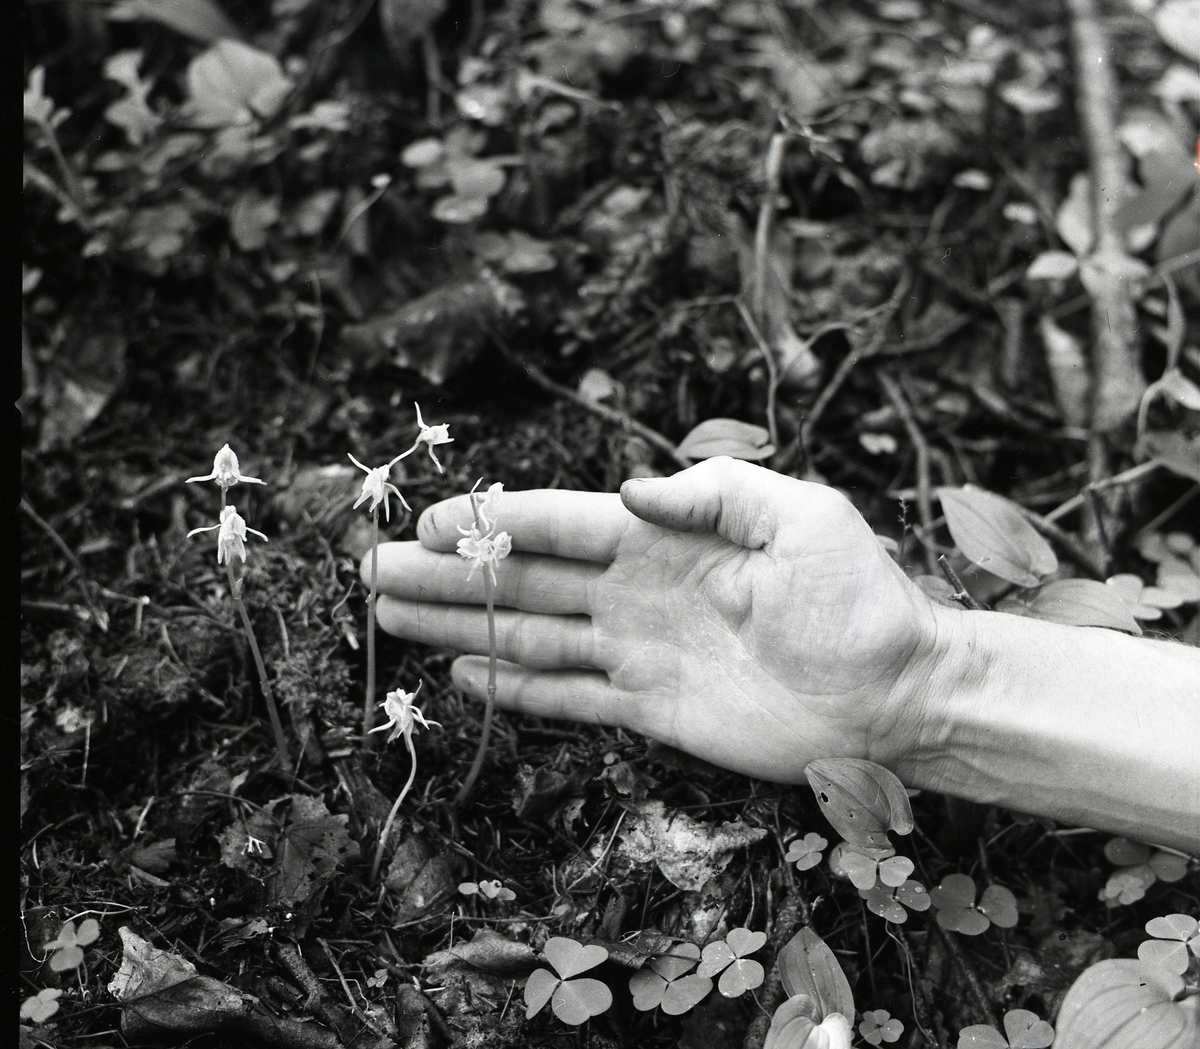 Sällsynt orkidé, Skogsfrun, med hand bakom som stöd. Lindefallet 5 augusti 1956.